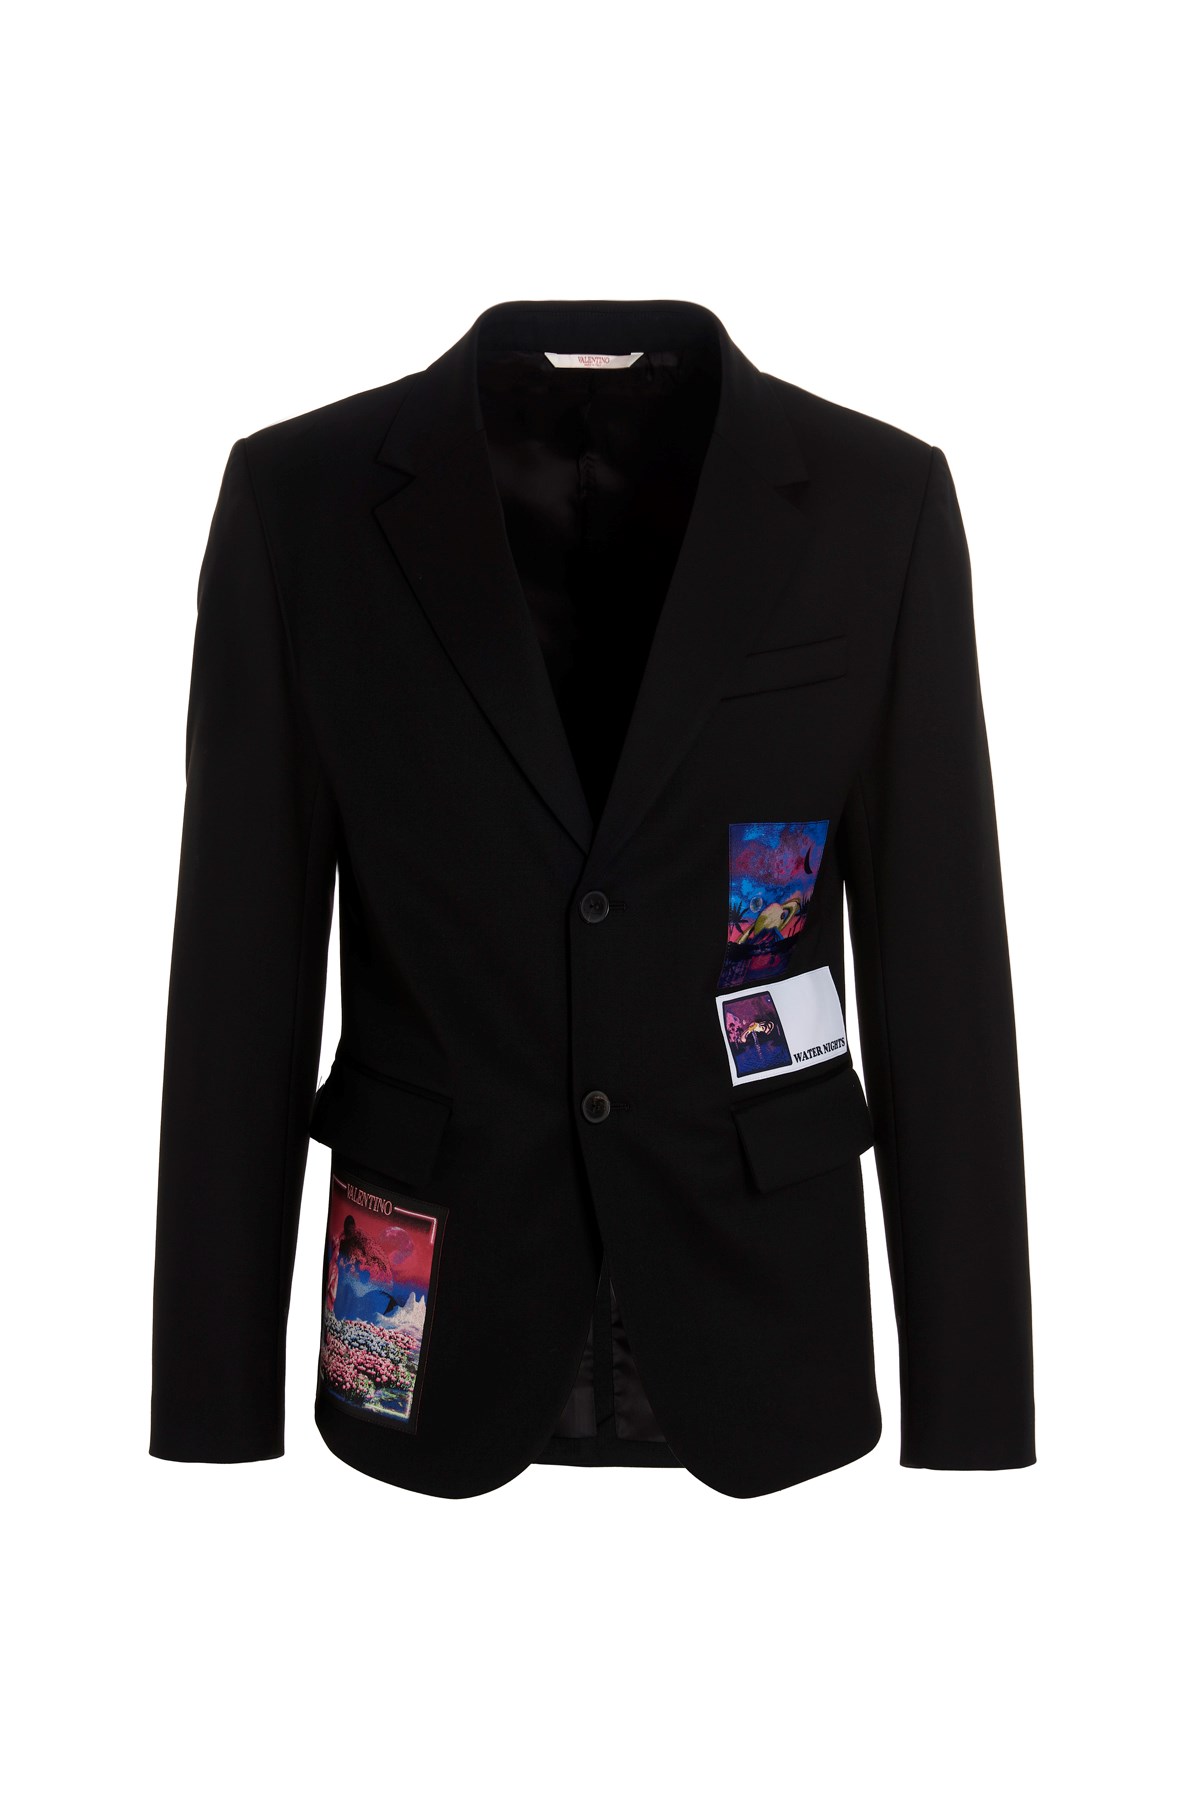 VALENTINO 'Water Night’ Blazer Jacket